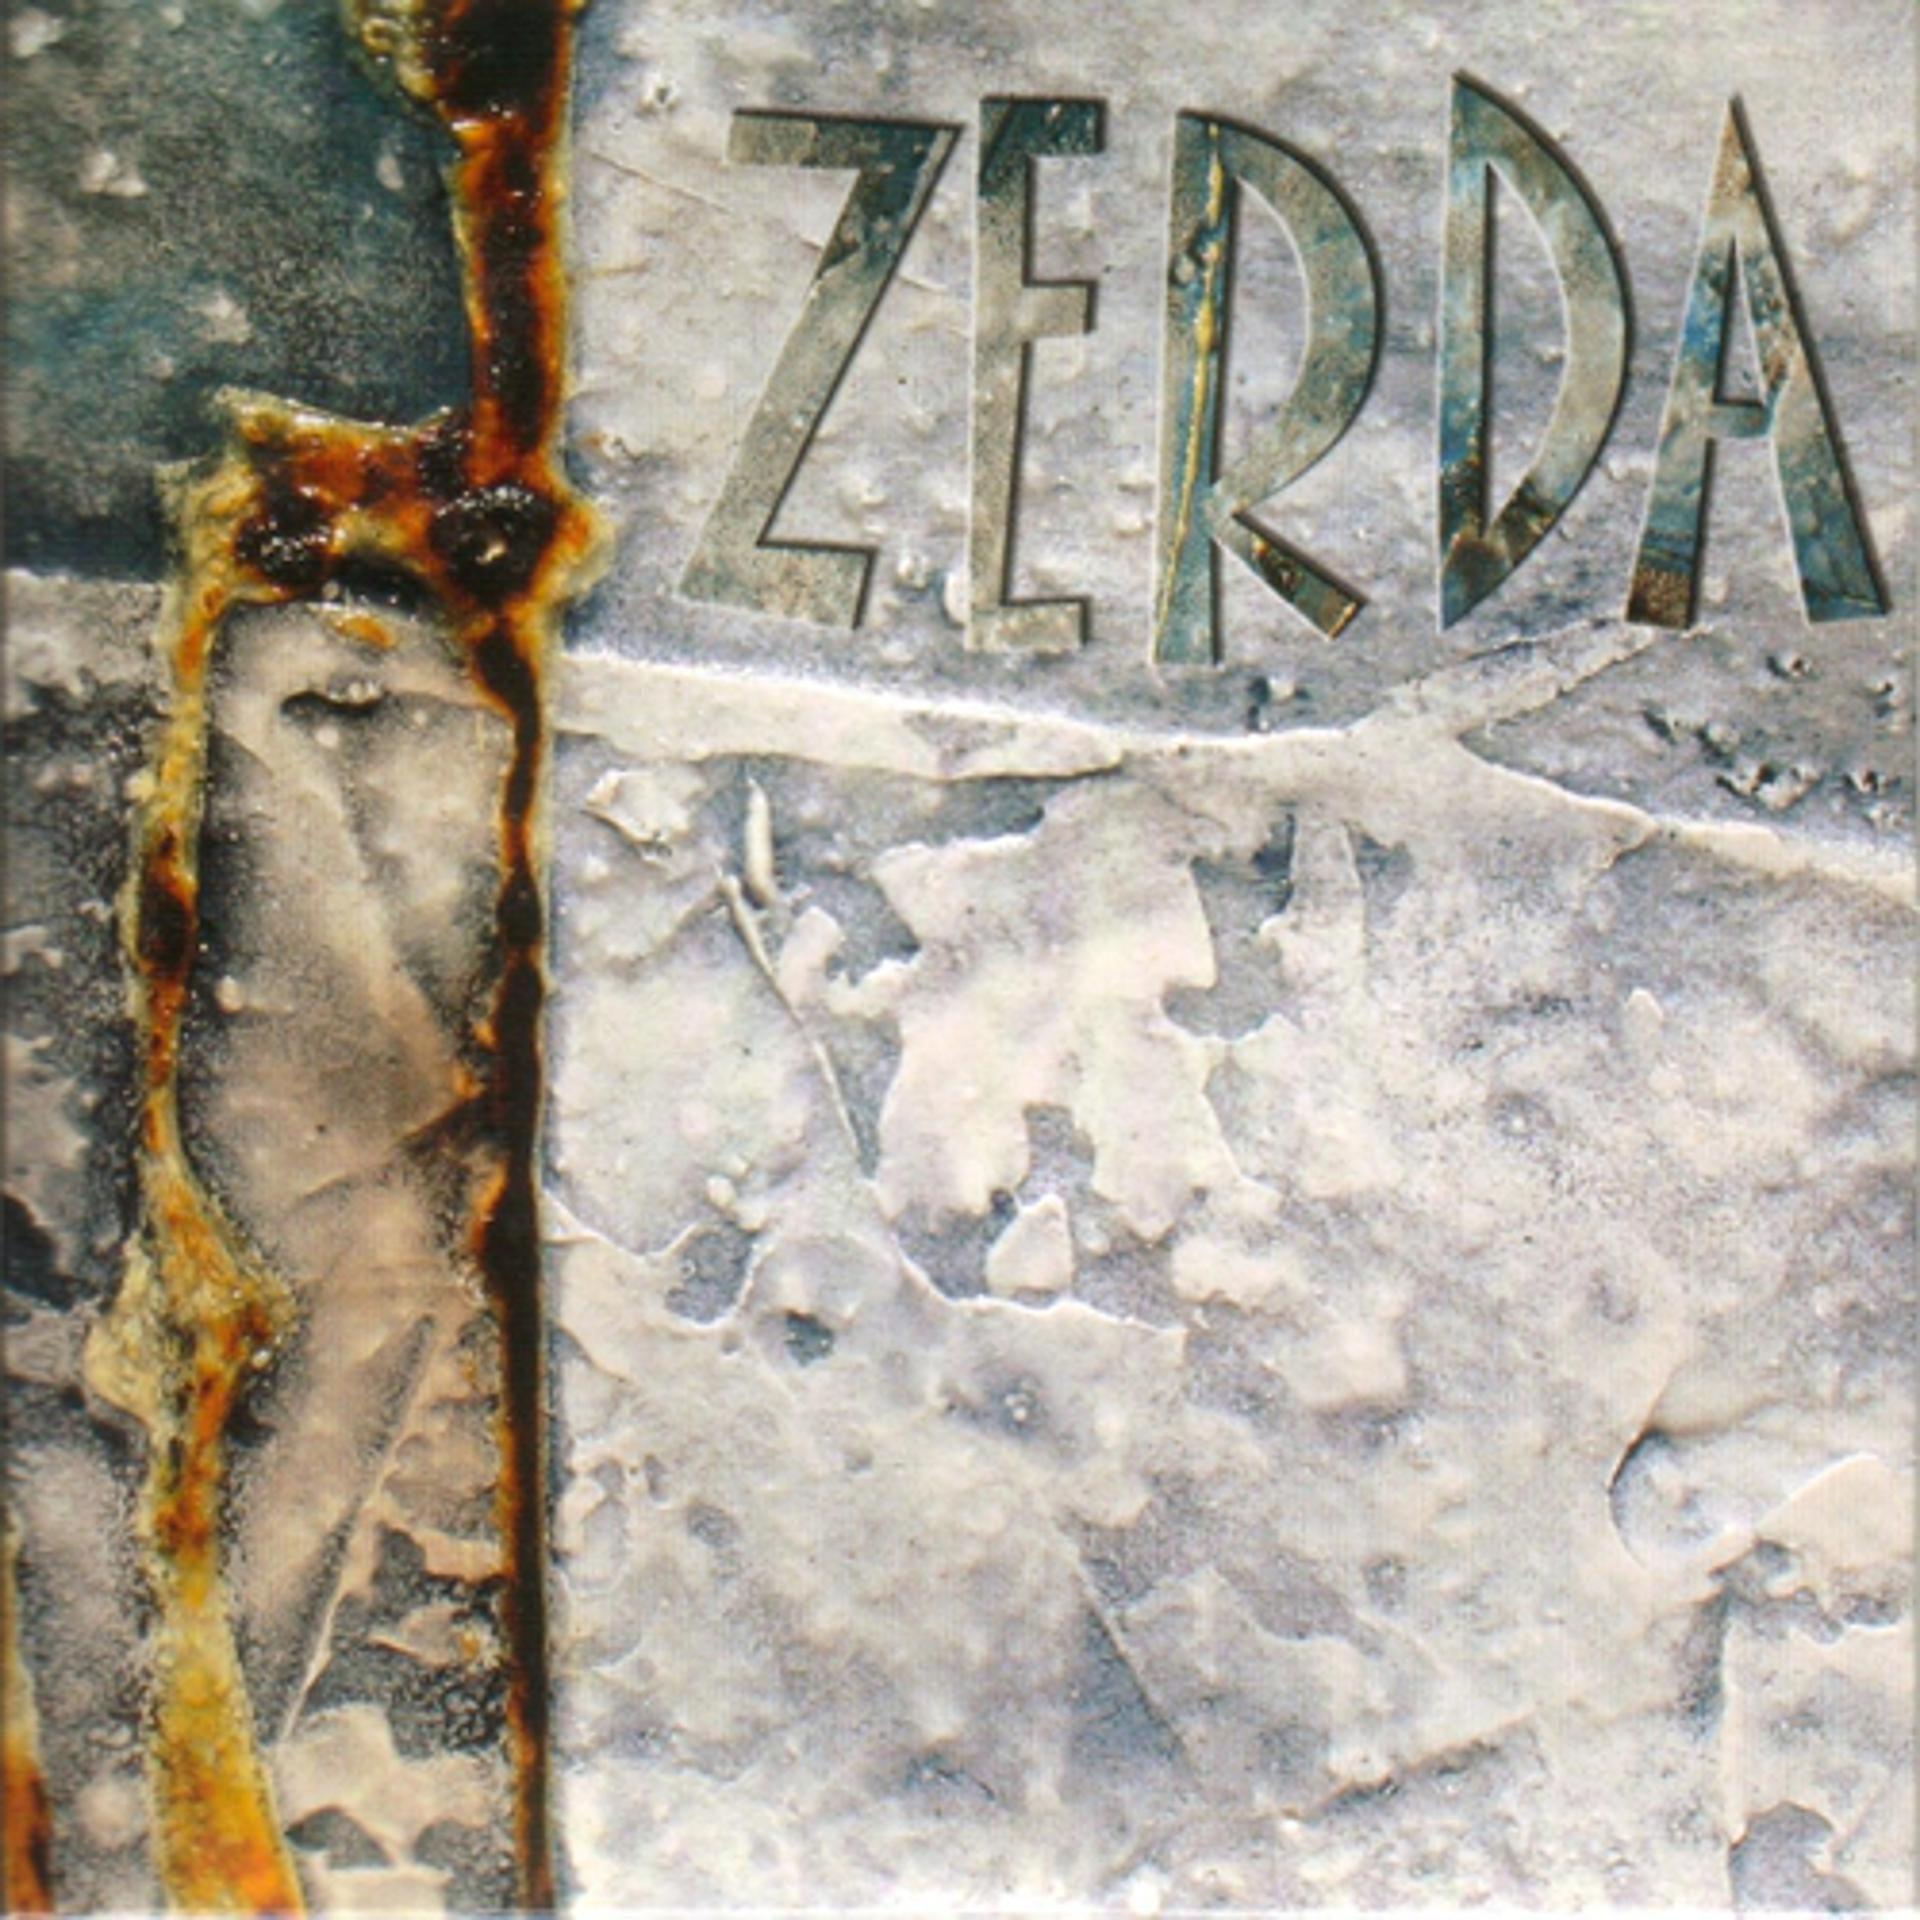 Постер альбома Zerda